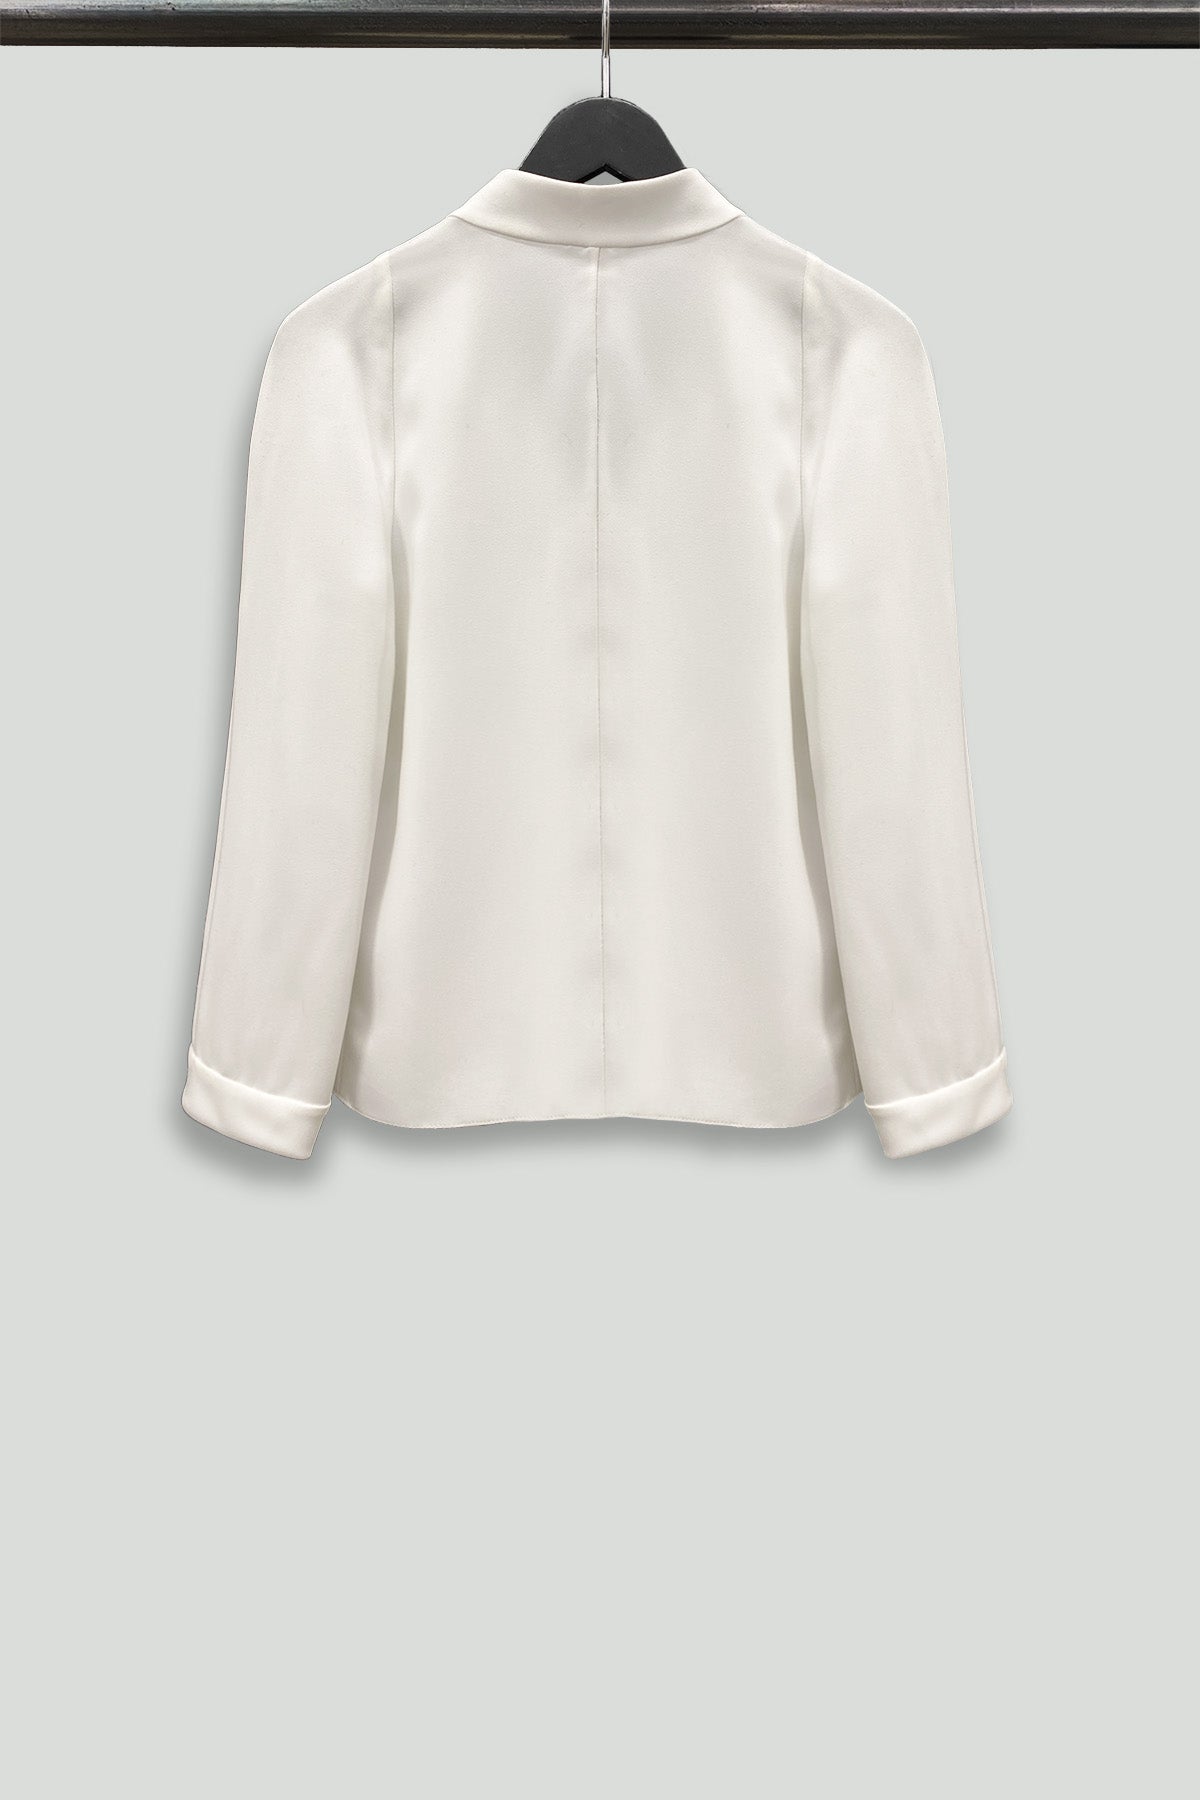 White Lightweight Microfiber Smart Gabardine Long Sleeve Shirt